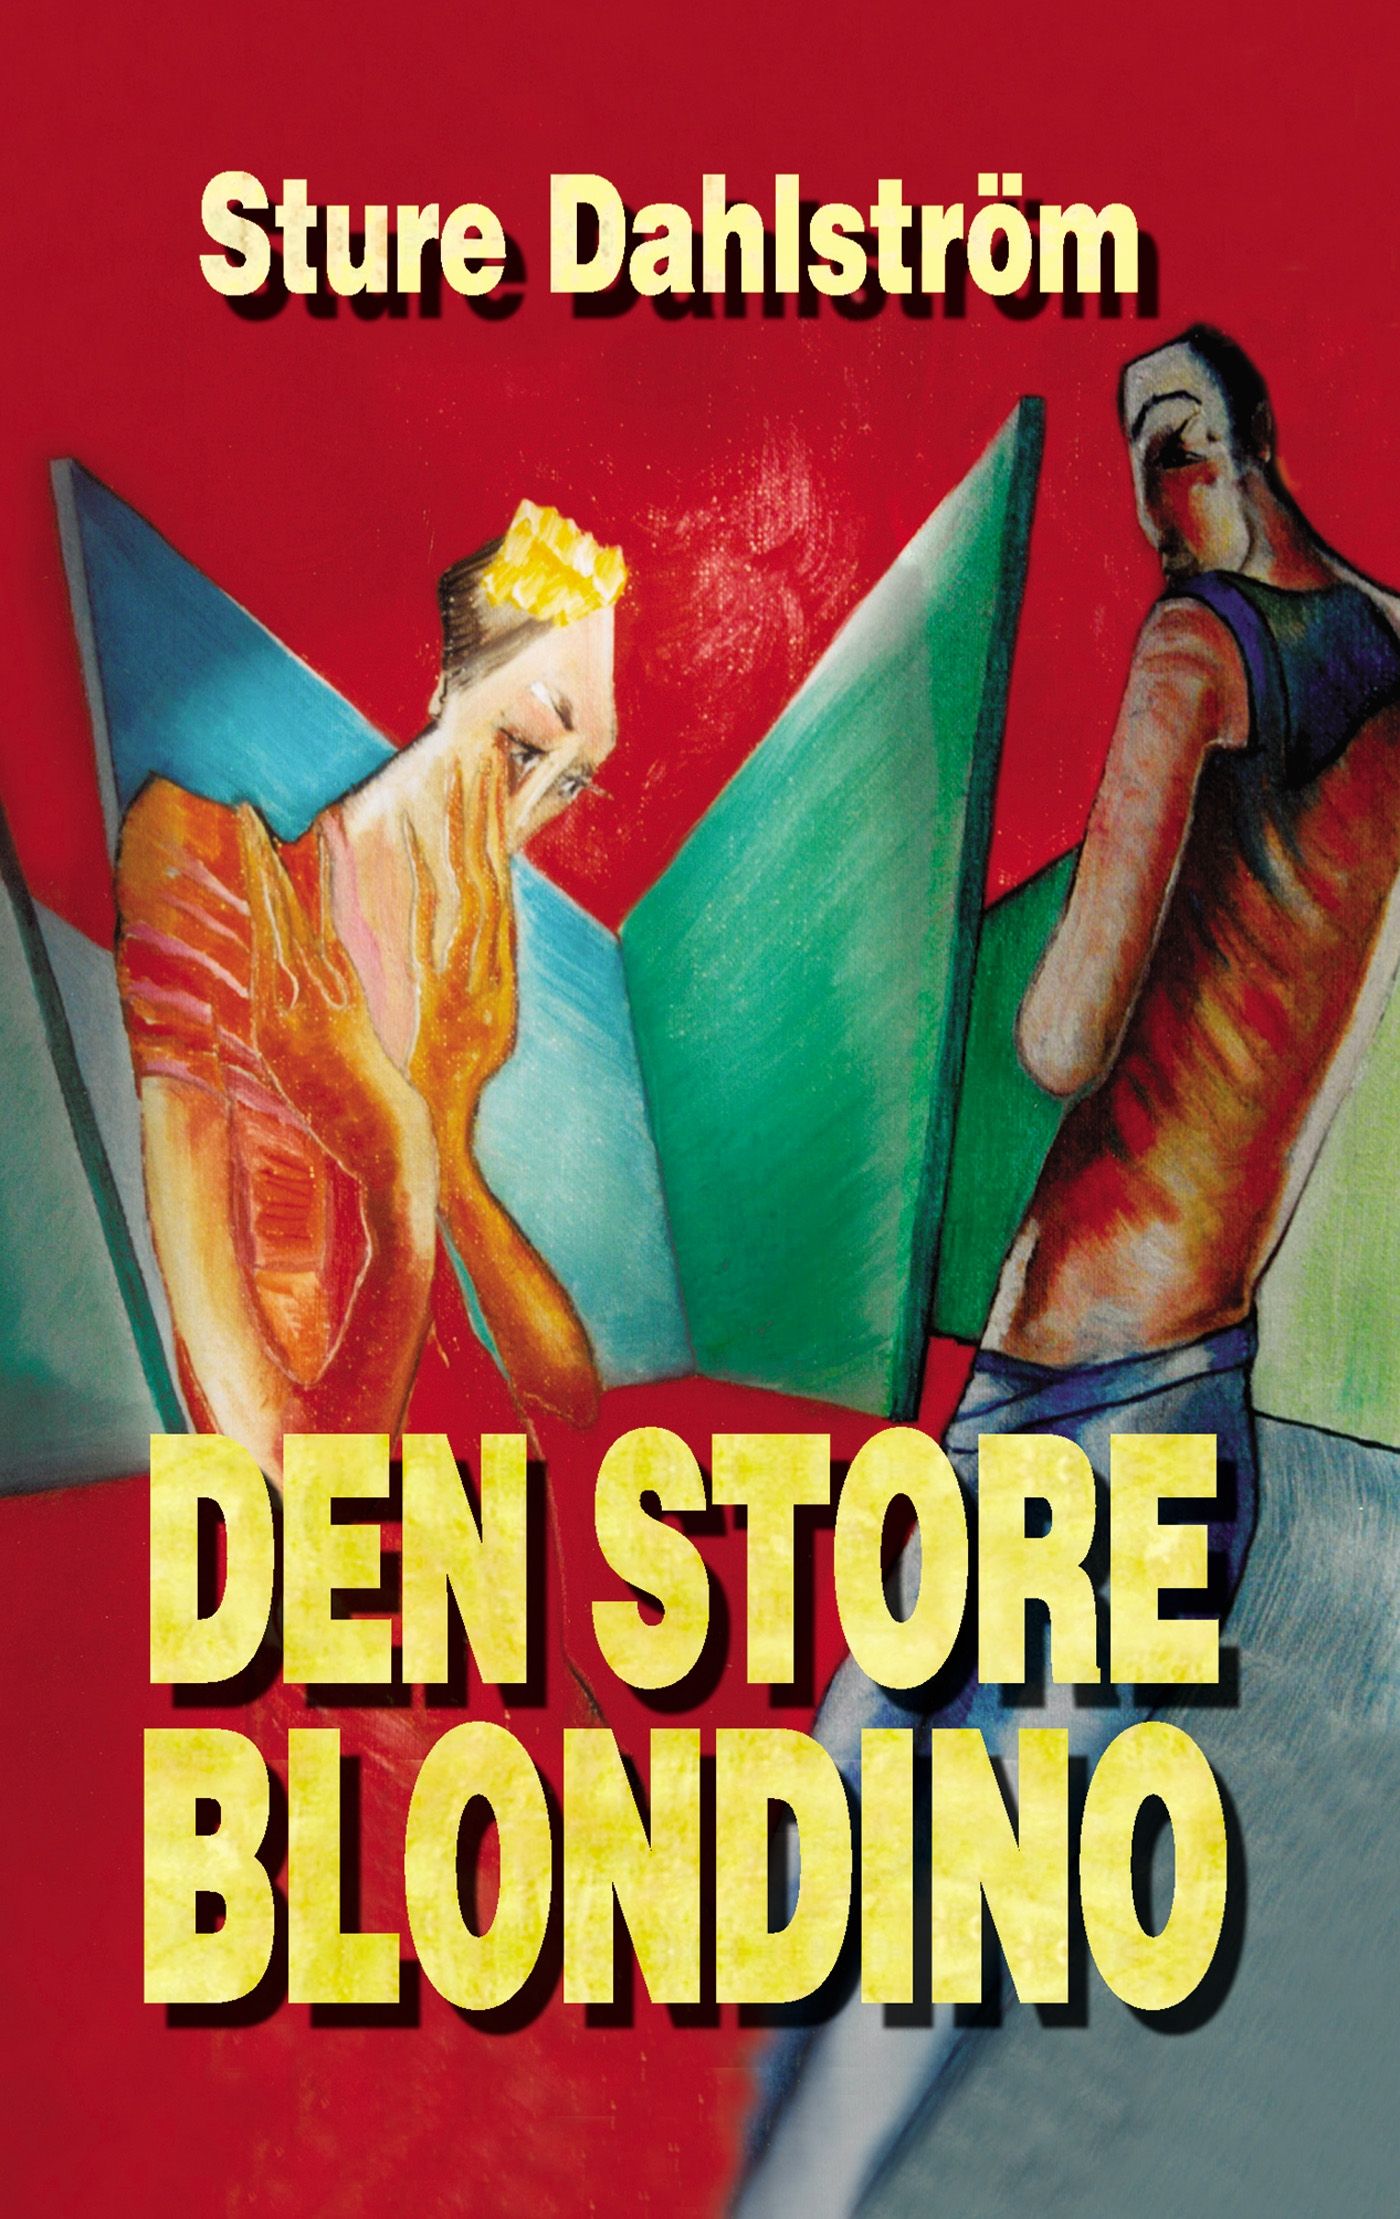 Den store Blondino, eBook by Sture Dahlström